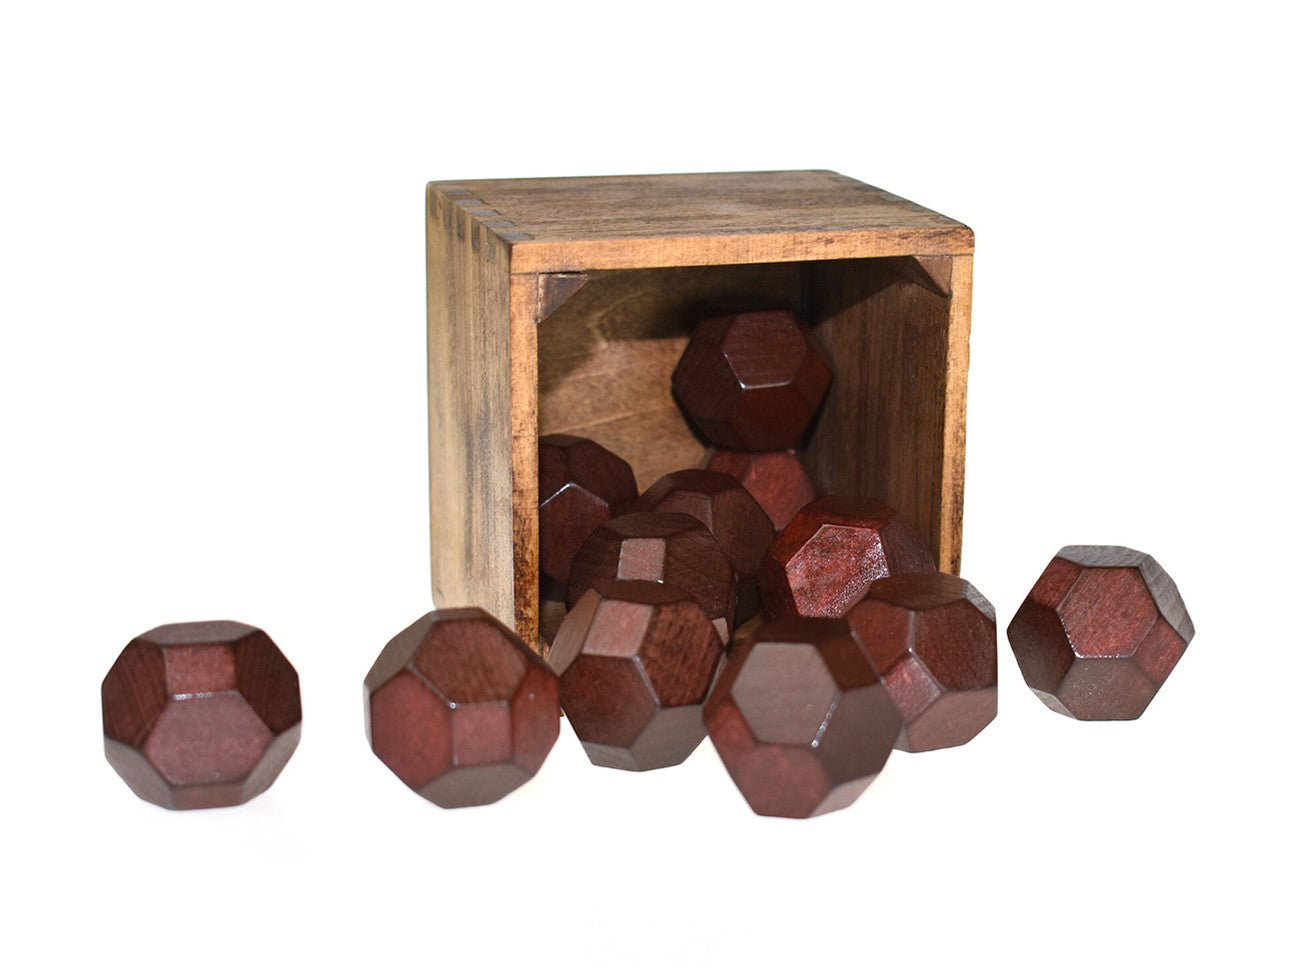 Wooden Sensory Blocks in box